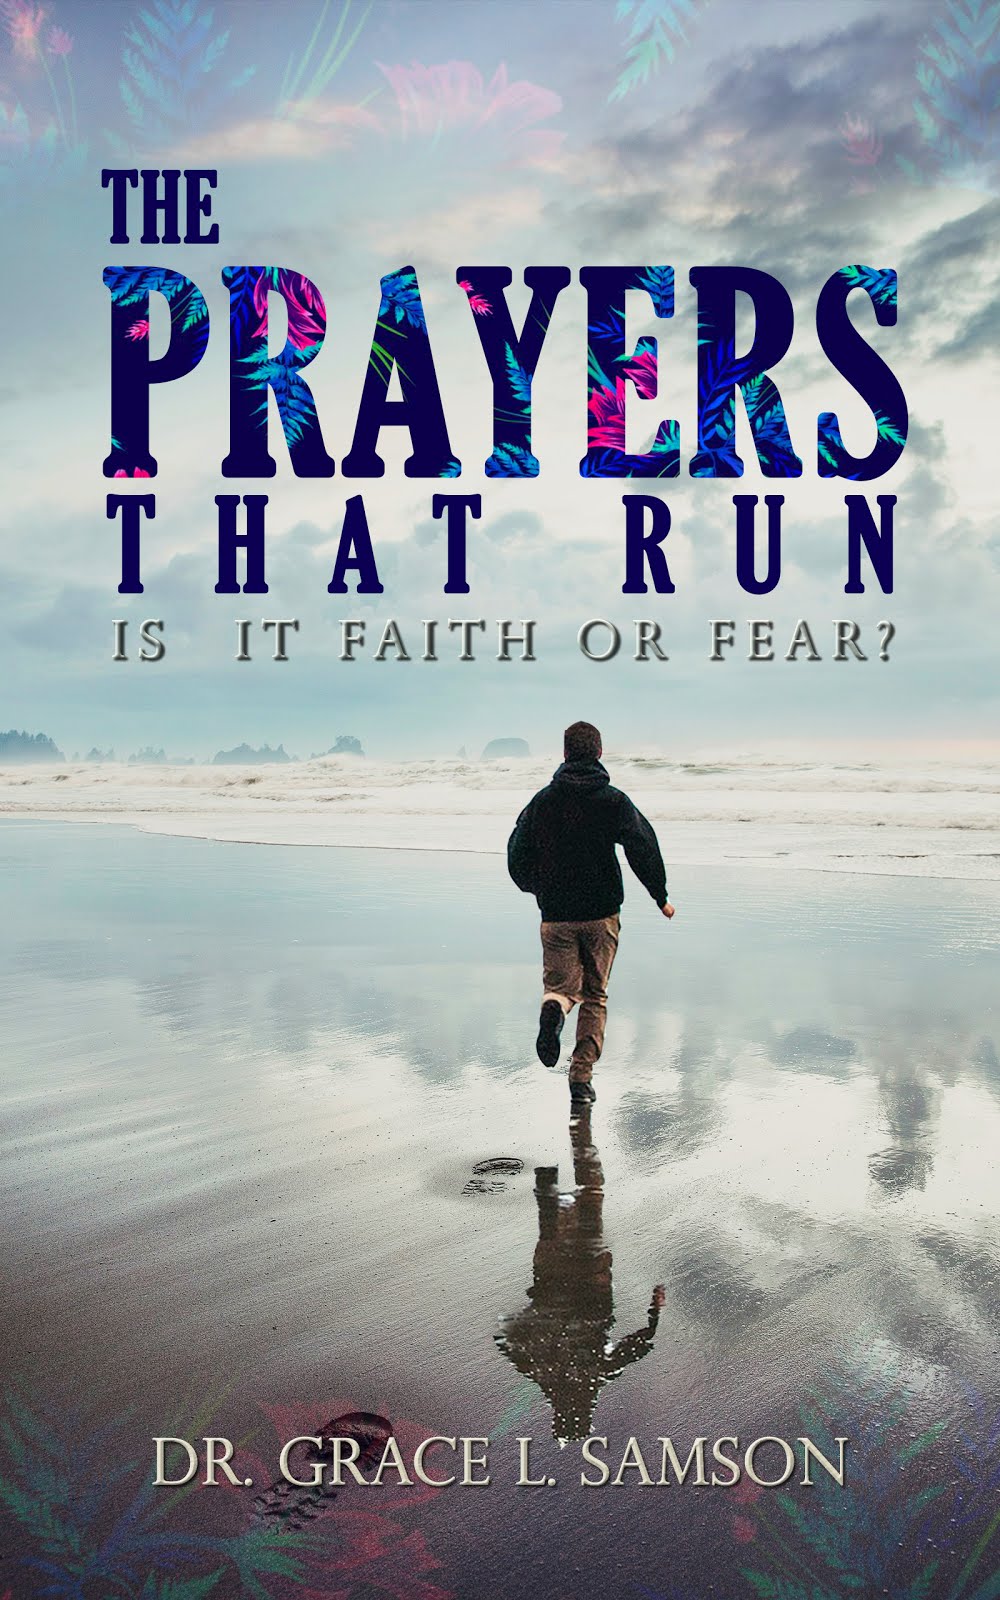 THE PRAYER THAT RUNS : IS IT FAITH OR FEAR